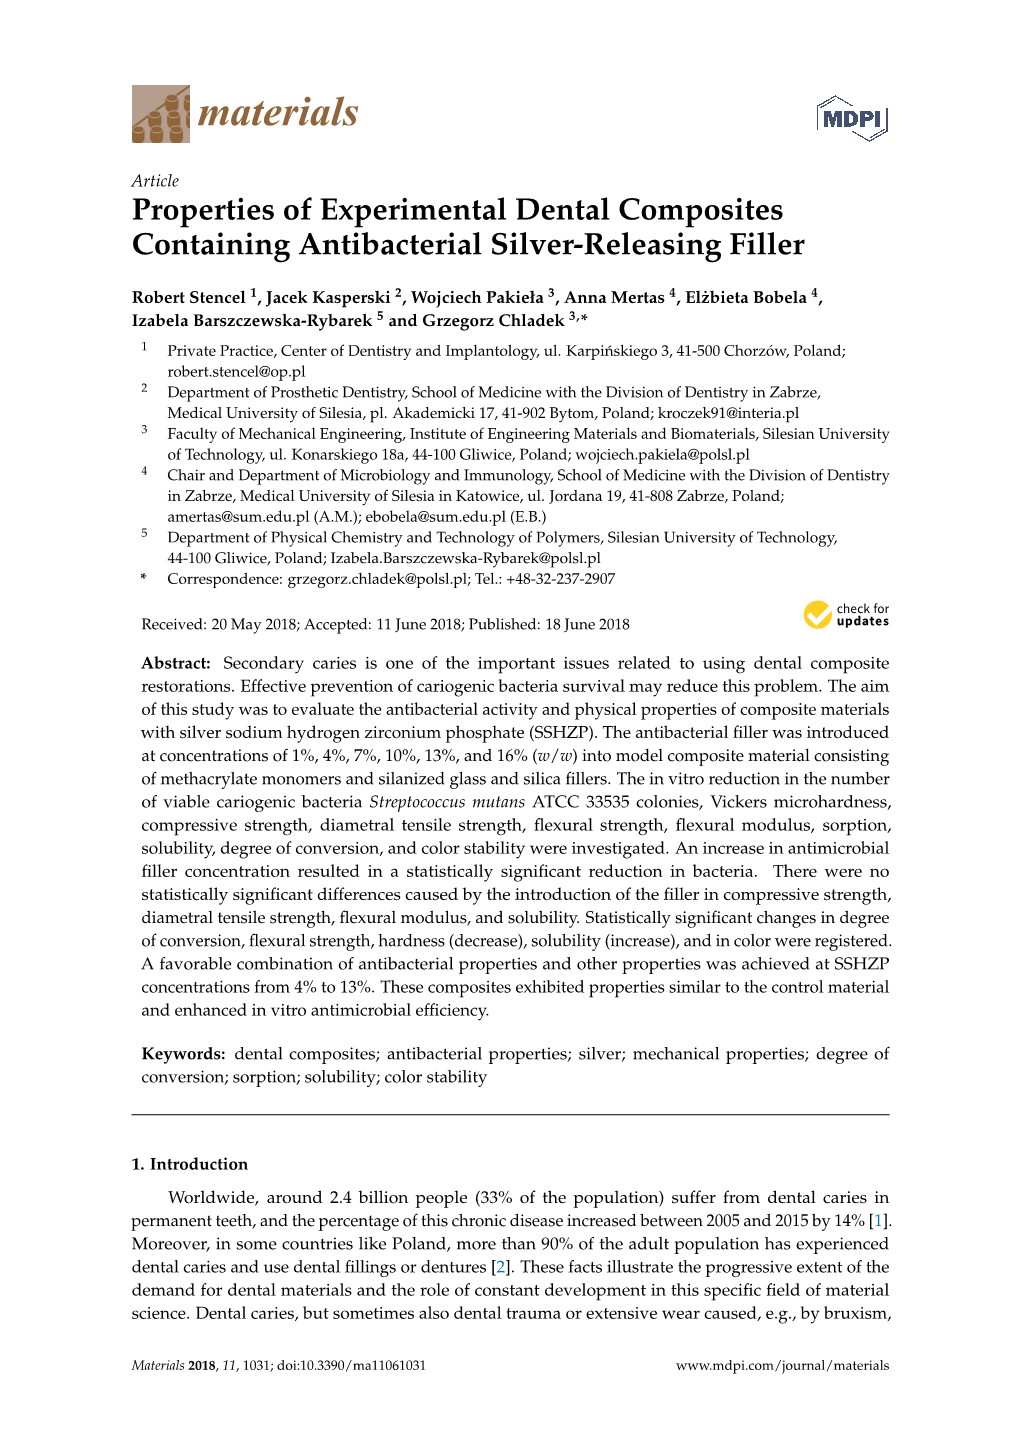 Properties of Experimental Dental Composites Containing Antibacterial Silver-Releasing Filler